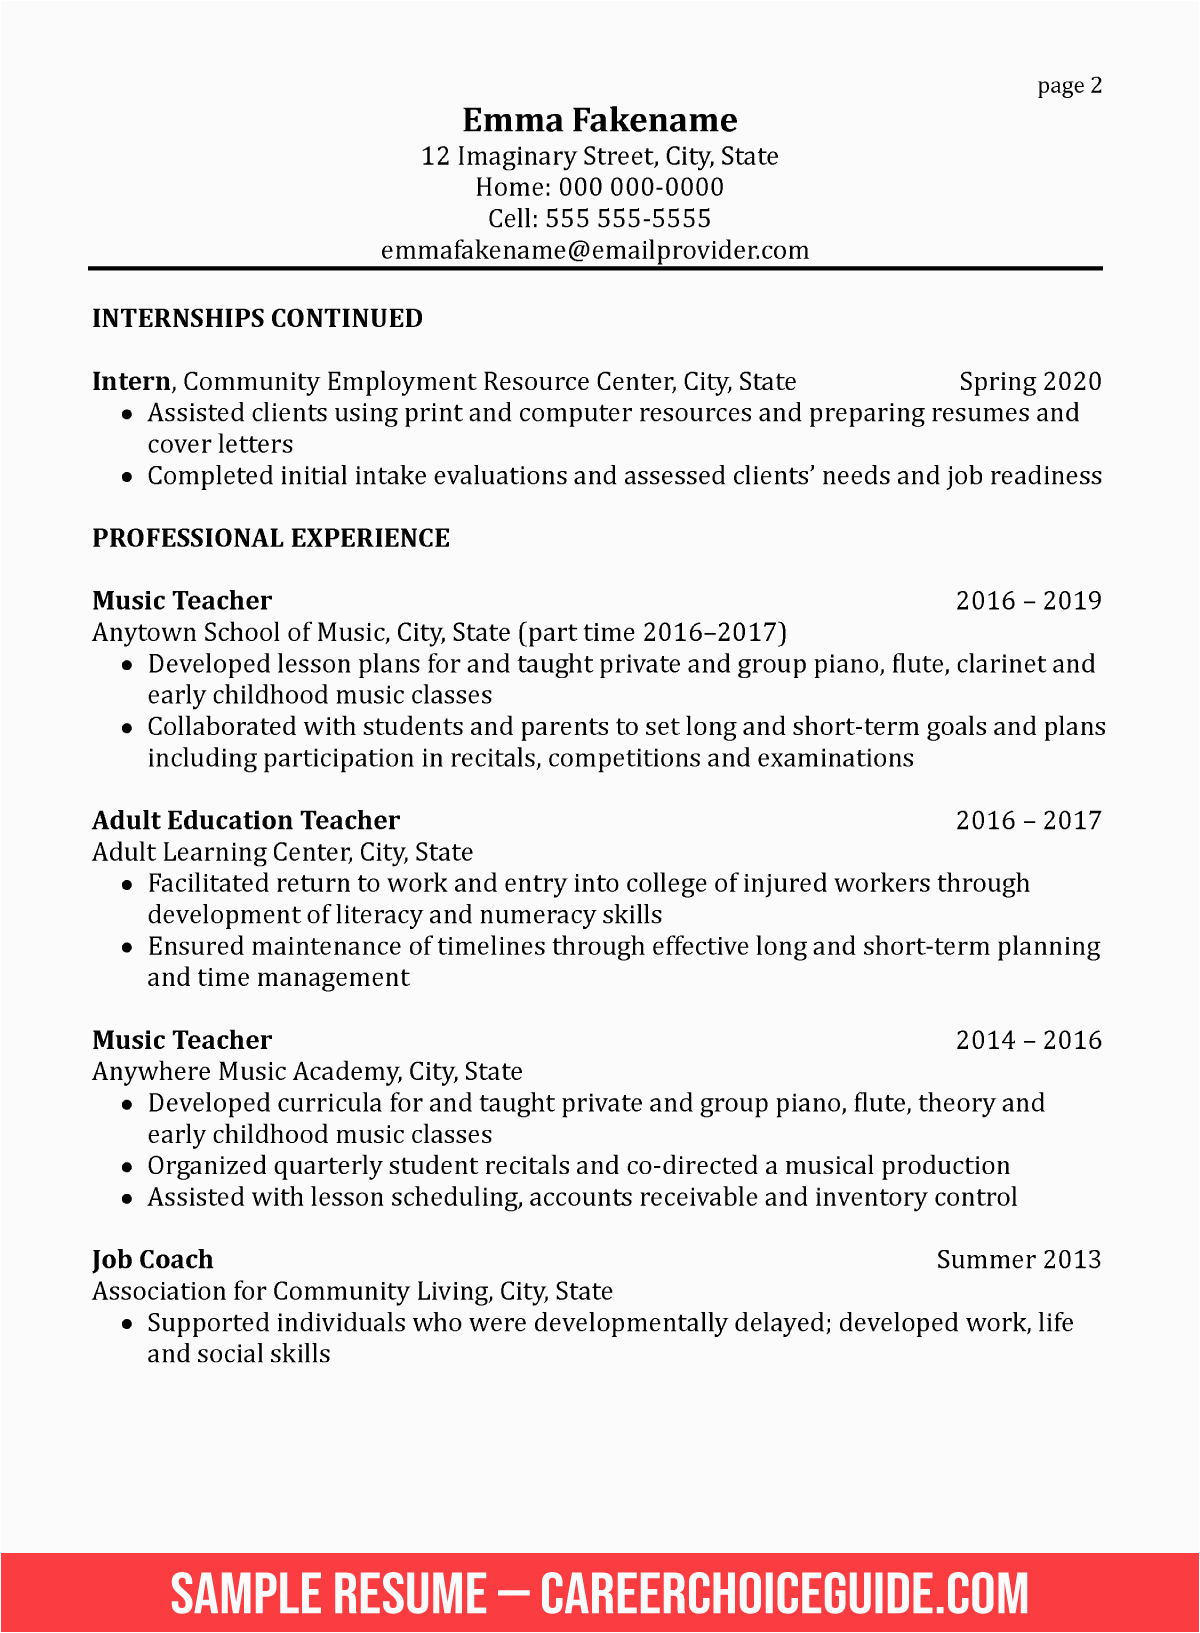 Sample Resume Summary for Career Change Career Change Resume Sample and Tips